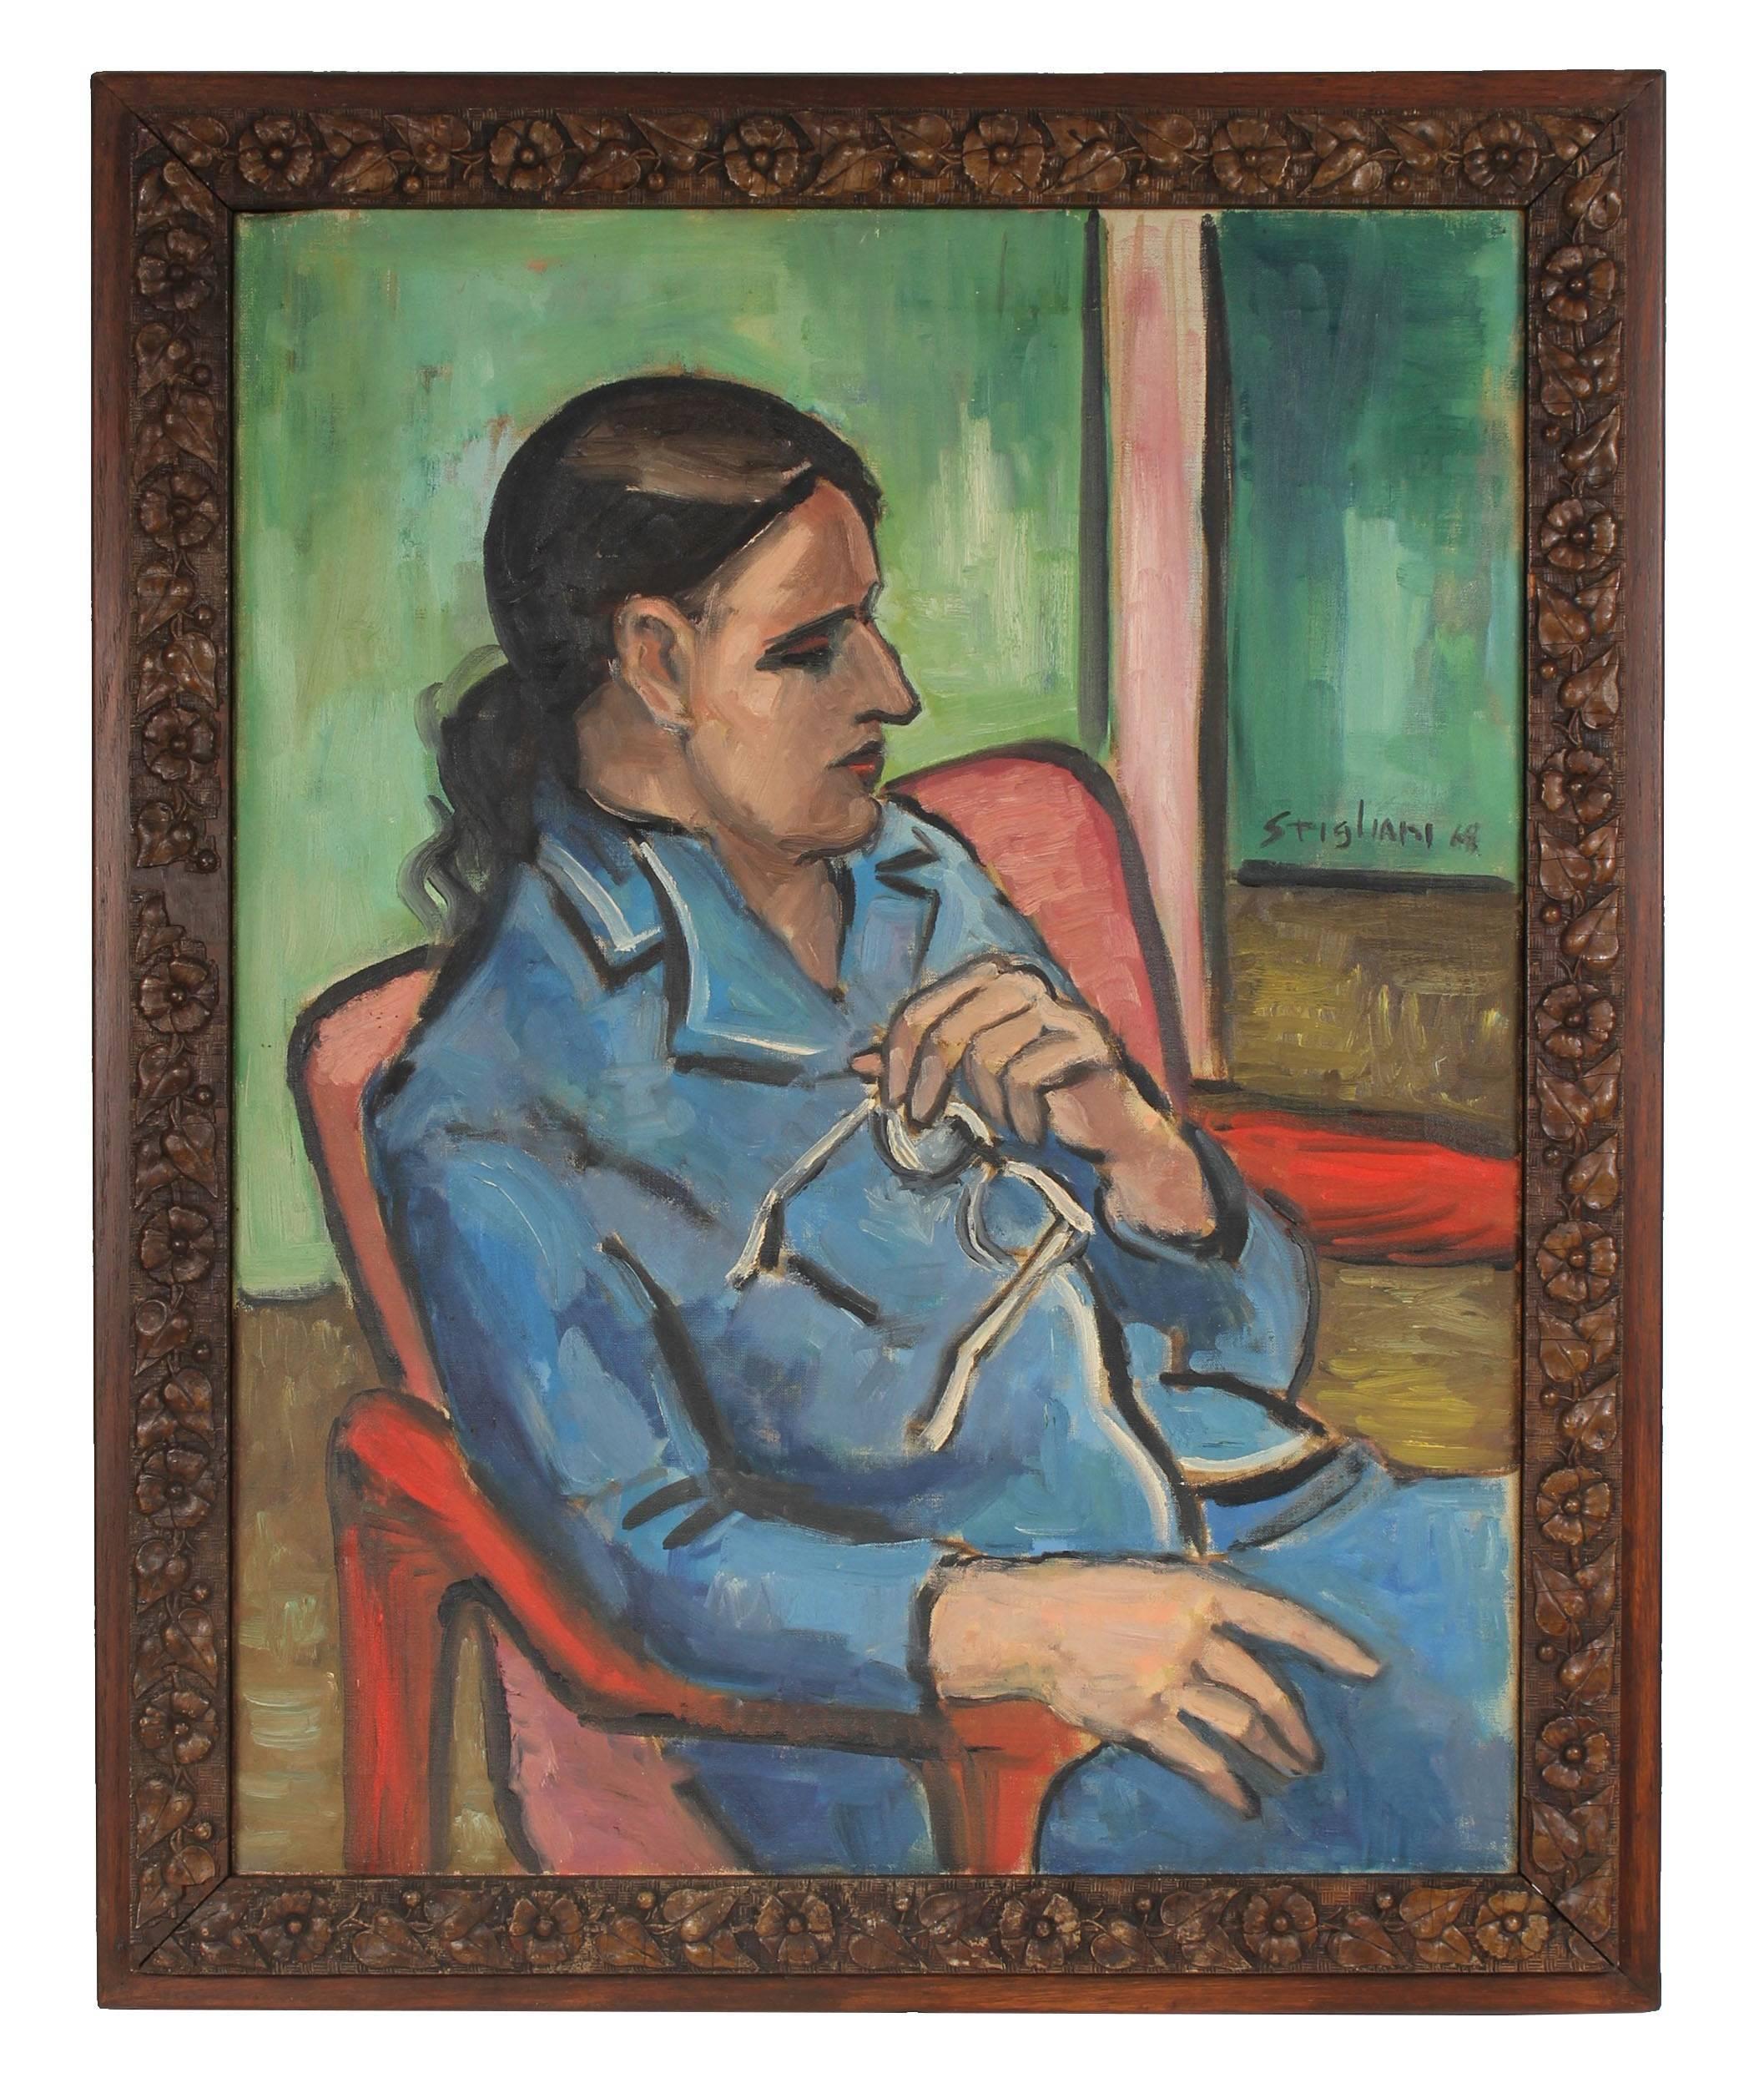 Pasquale Patrick Stigliani Portrait Painting - "Rita with Glasses", Modernist Portrait of a Woman in Green, 1968